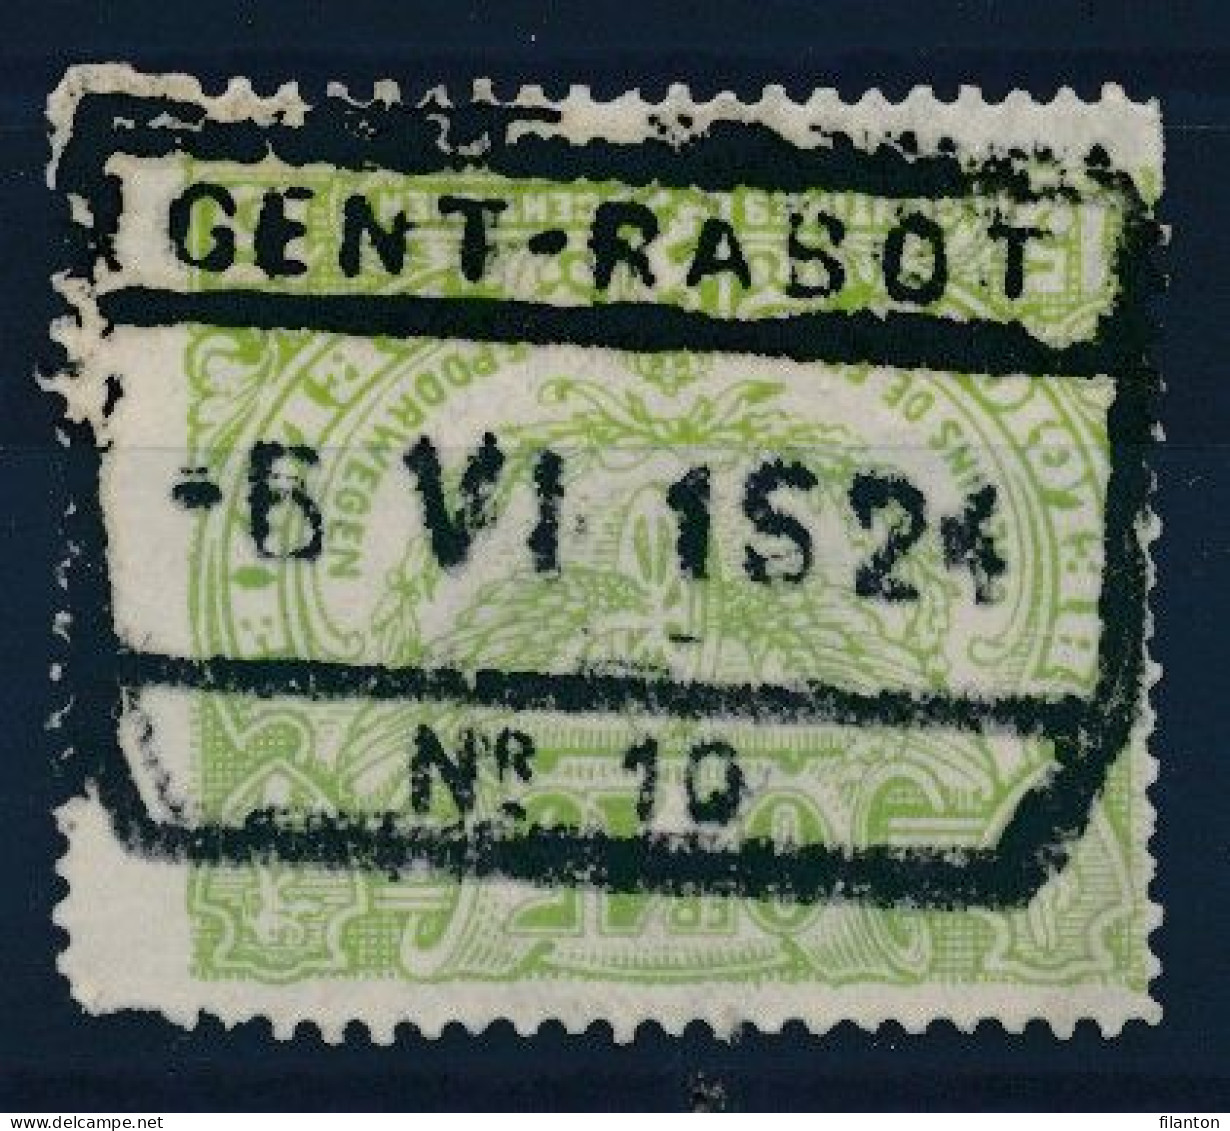 TR  101 -  "GENT-RABOT Nr 10" - (ref. 37.432) - Used